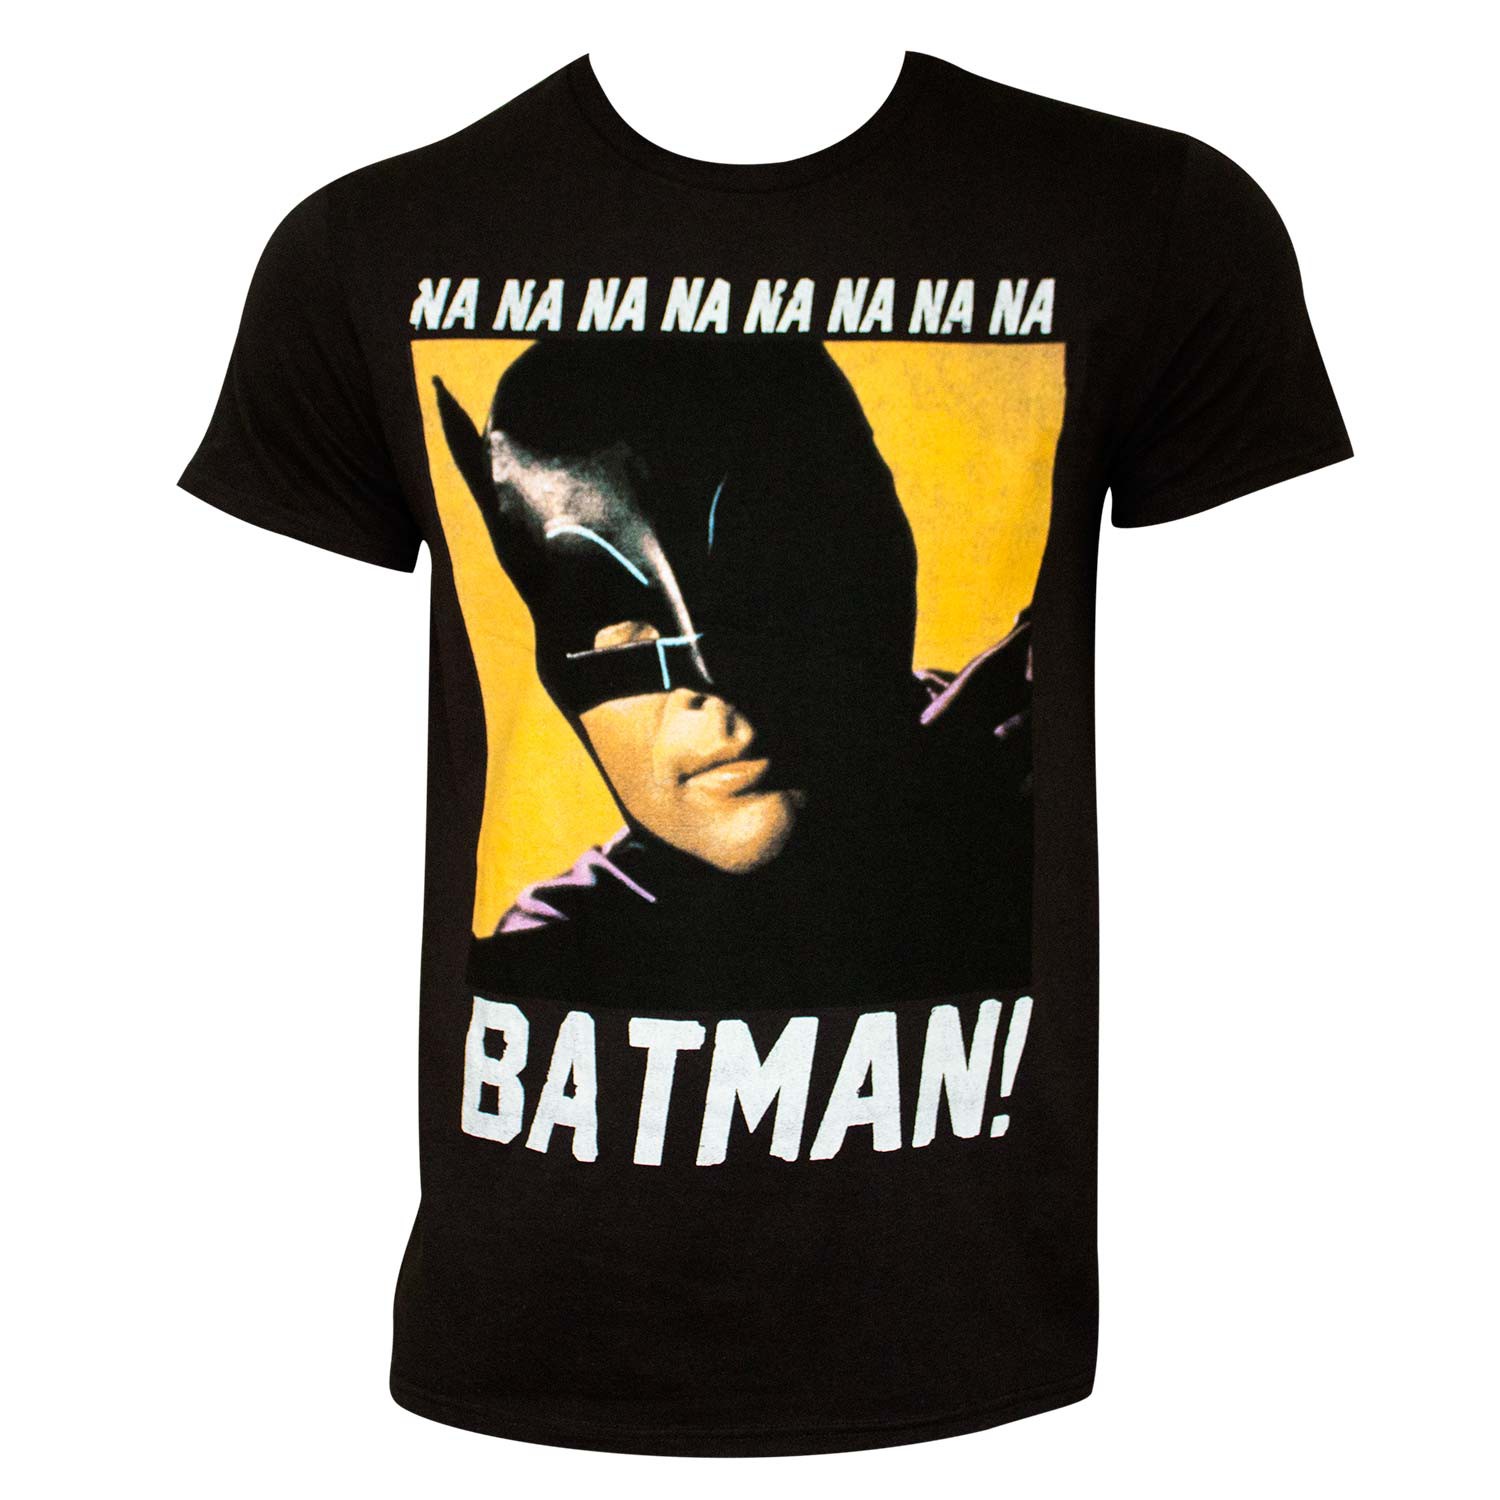 Batman NANANA Black Tee Shirt